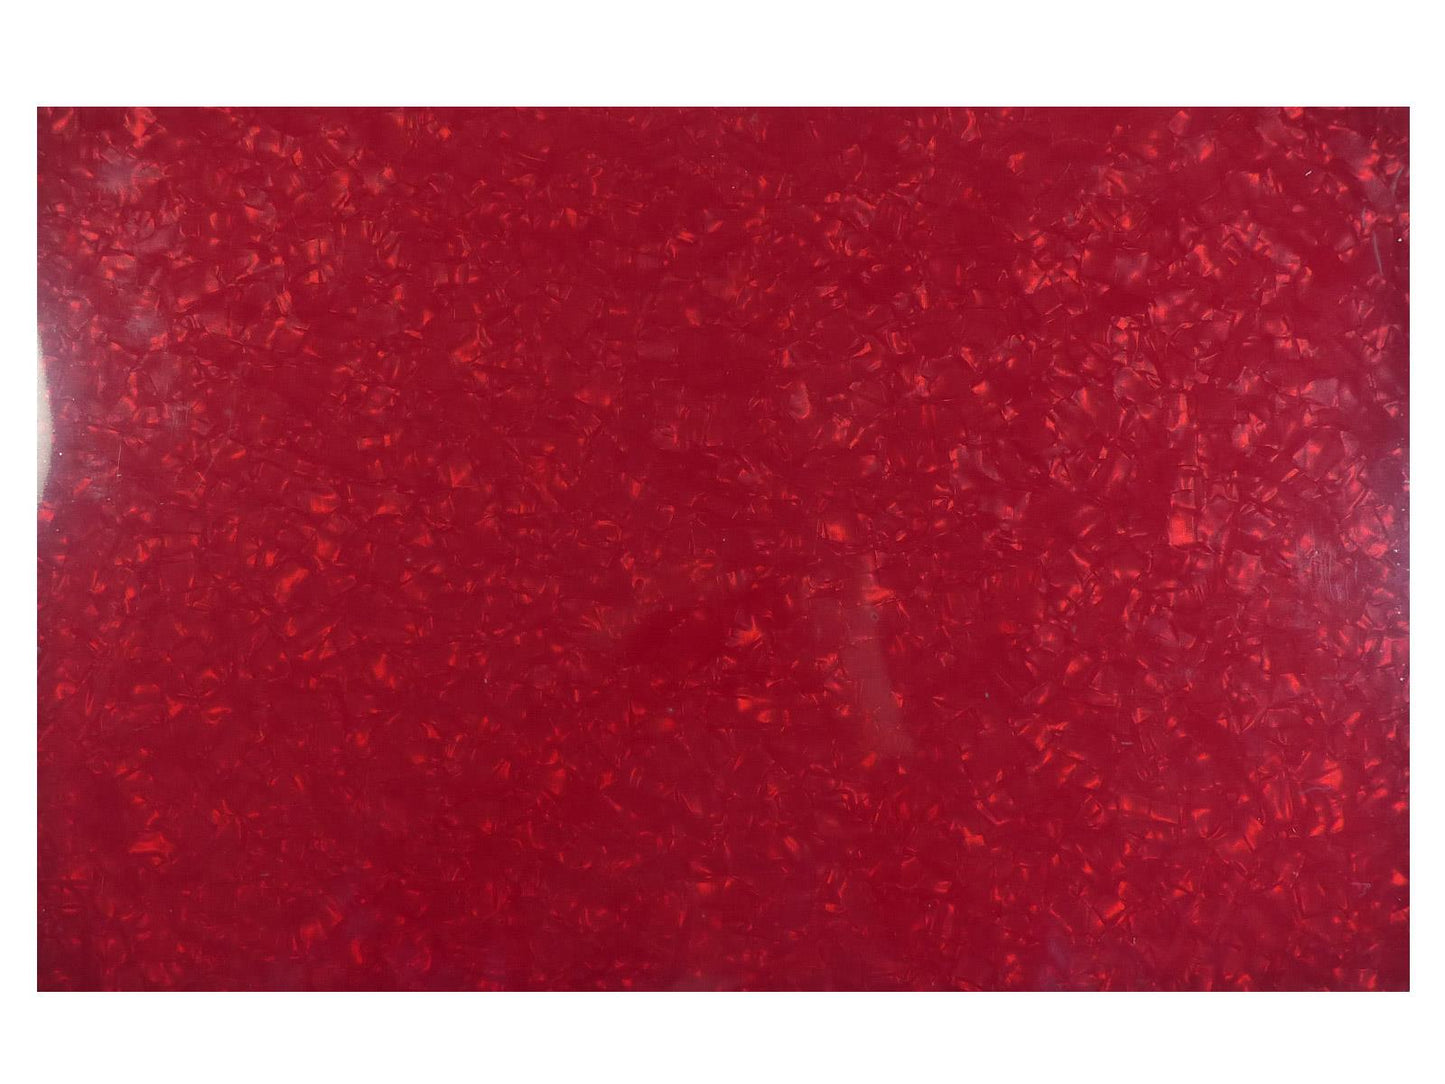 Borderlands Red Pearloid PVC Sheet - 430x290x2.5mm (16.9x11.42x0.1"), 4-Ply